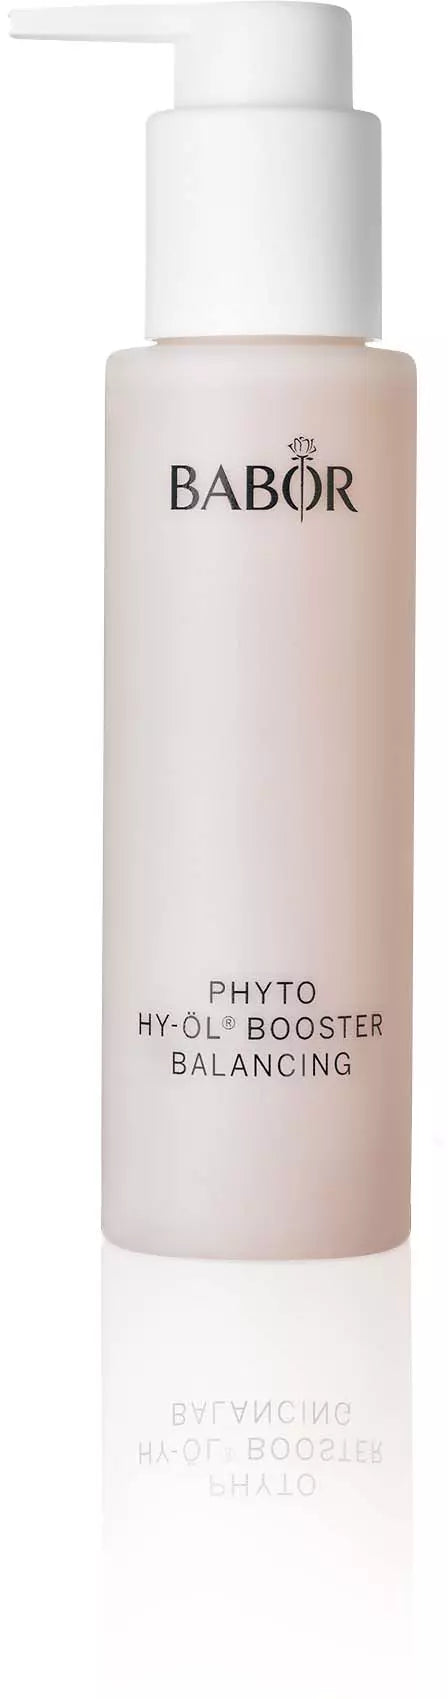 Phyto HY-Øl Booster Balancing